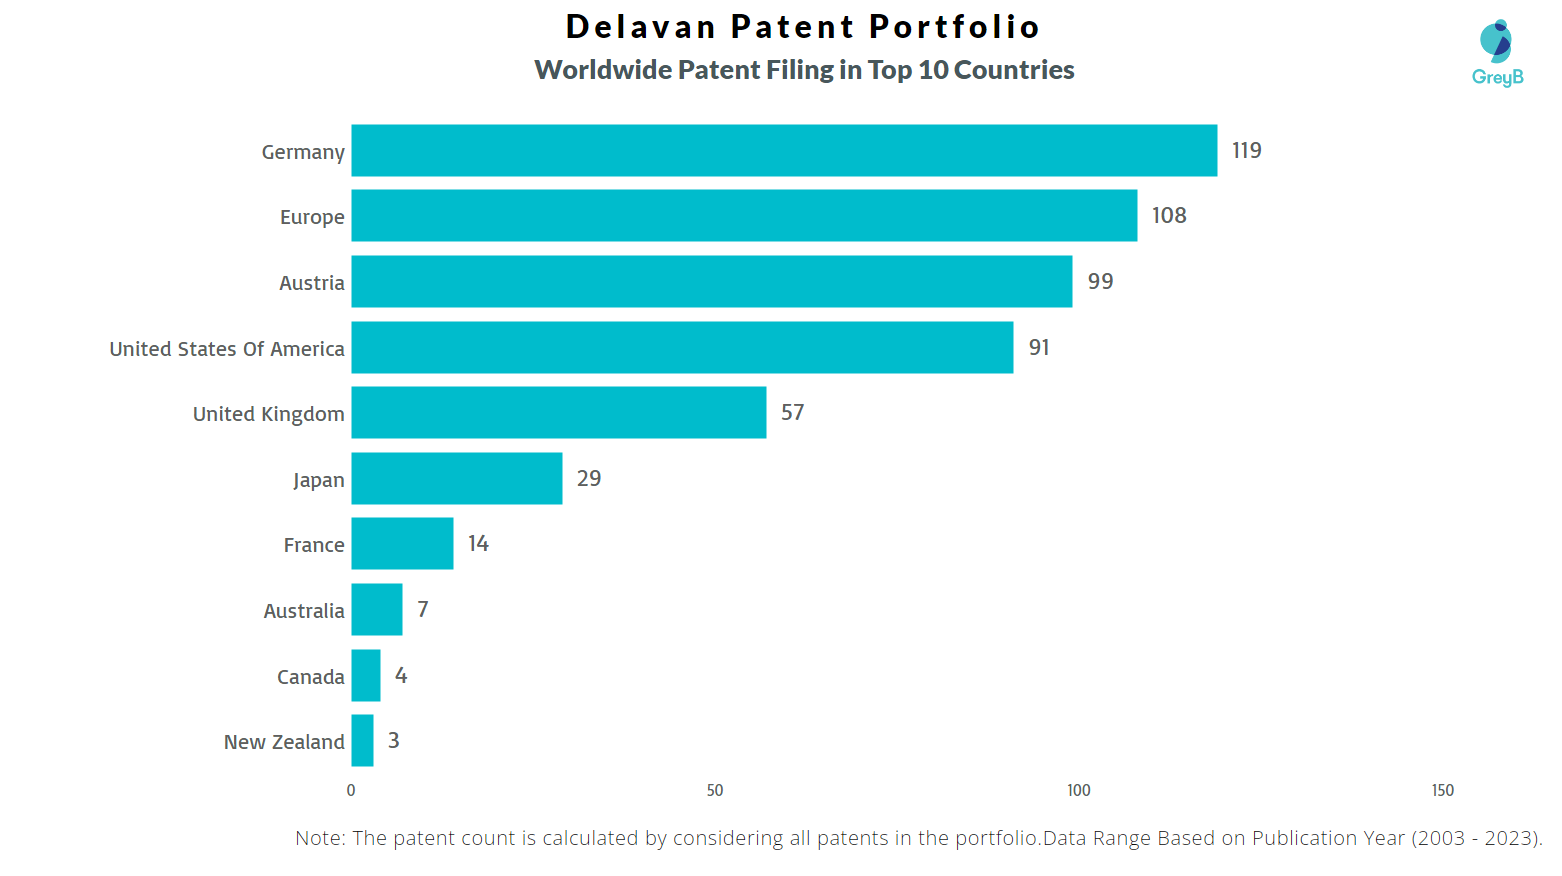 Delavan Worldwide Patent Filing